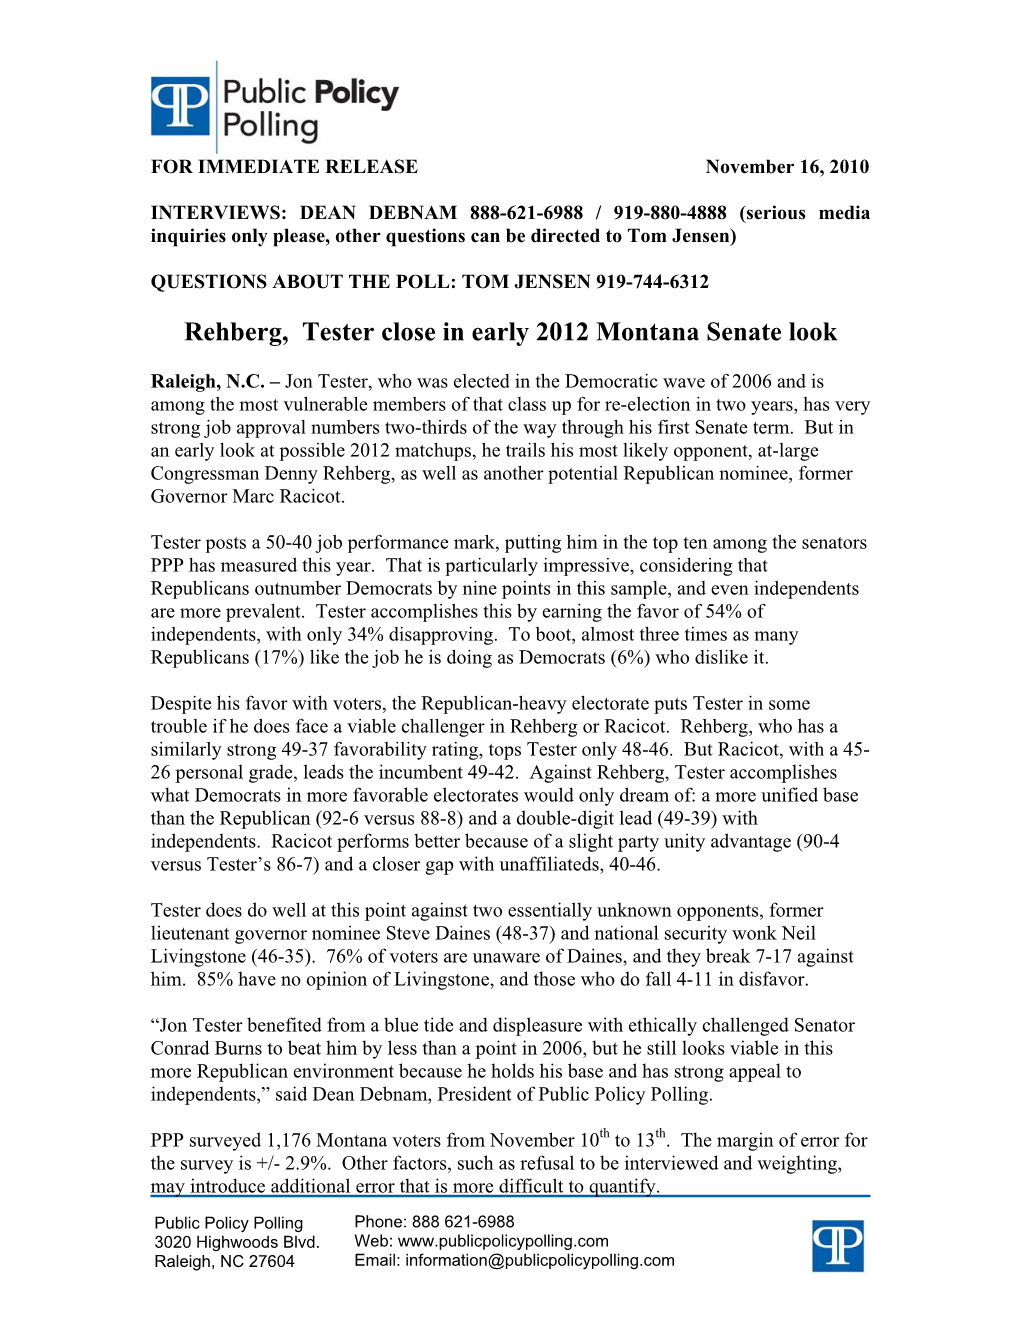 Rehberg, Tester Close in Early 2012 Montana Senate Look